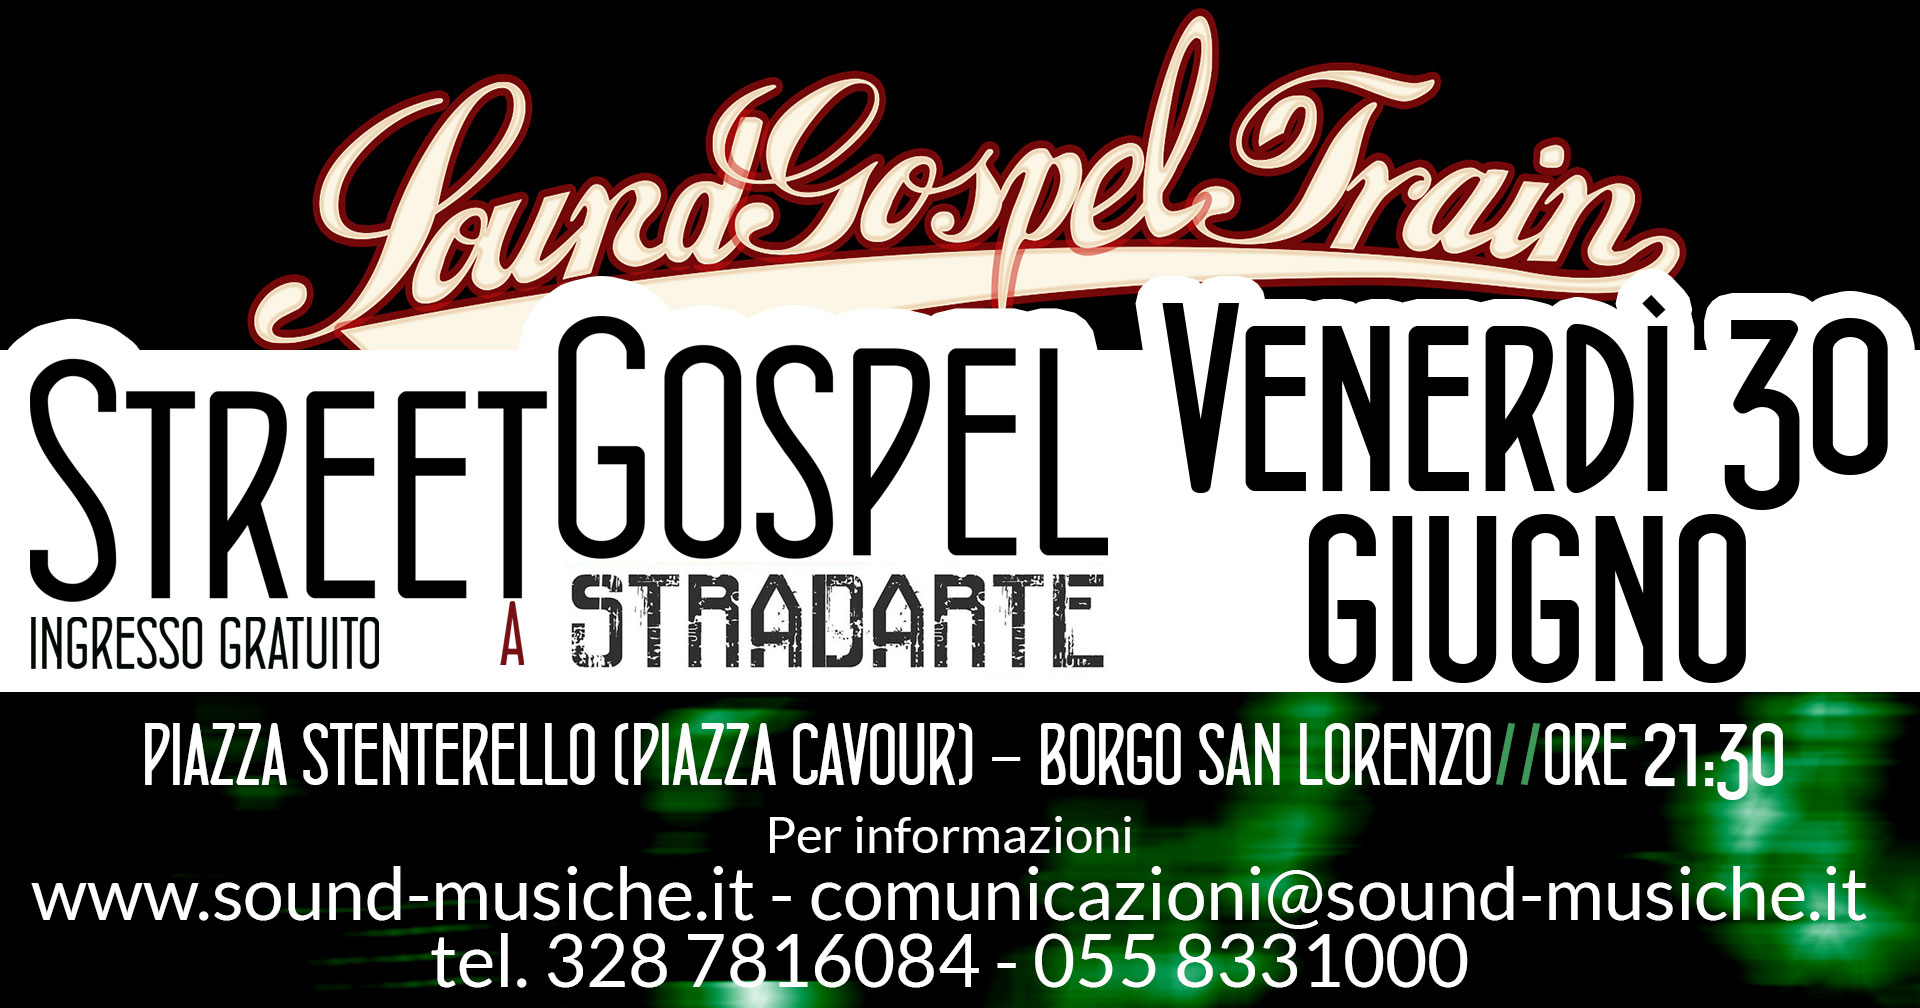 Street Gospel a Stradarte Venerdì 30 Giugno ore 21:30 Piazza Cavour Borgo S. Lorenzo